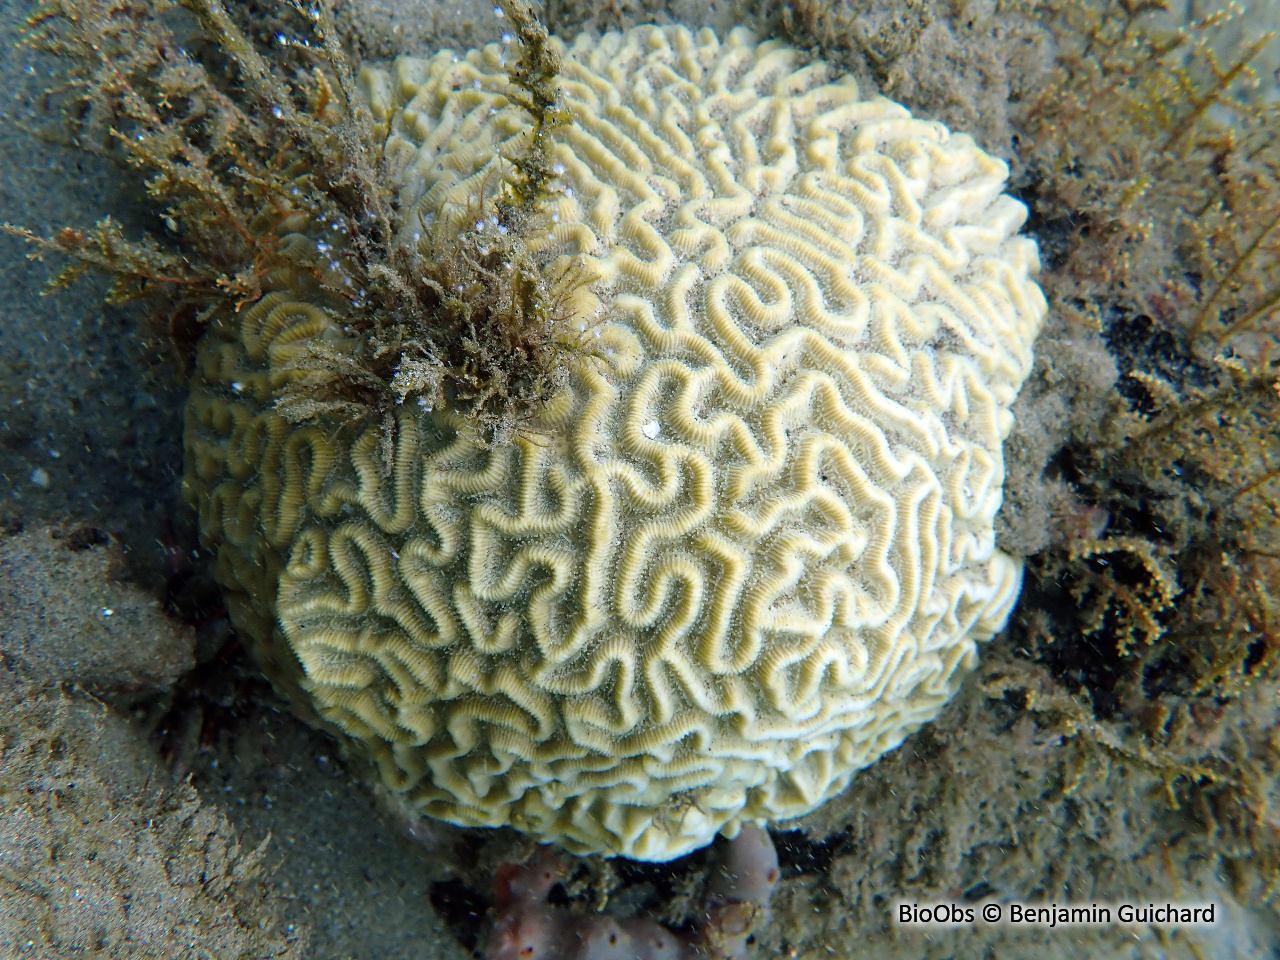 Corail-cerveau symétrique - Pseudodiploria strigosa - Benjamin Guichard - BioObs